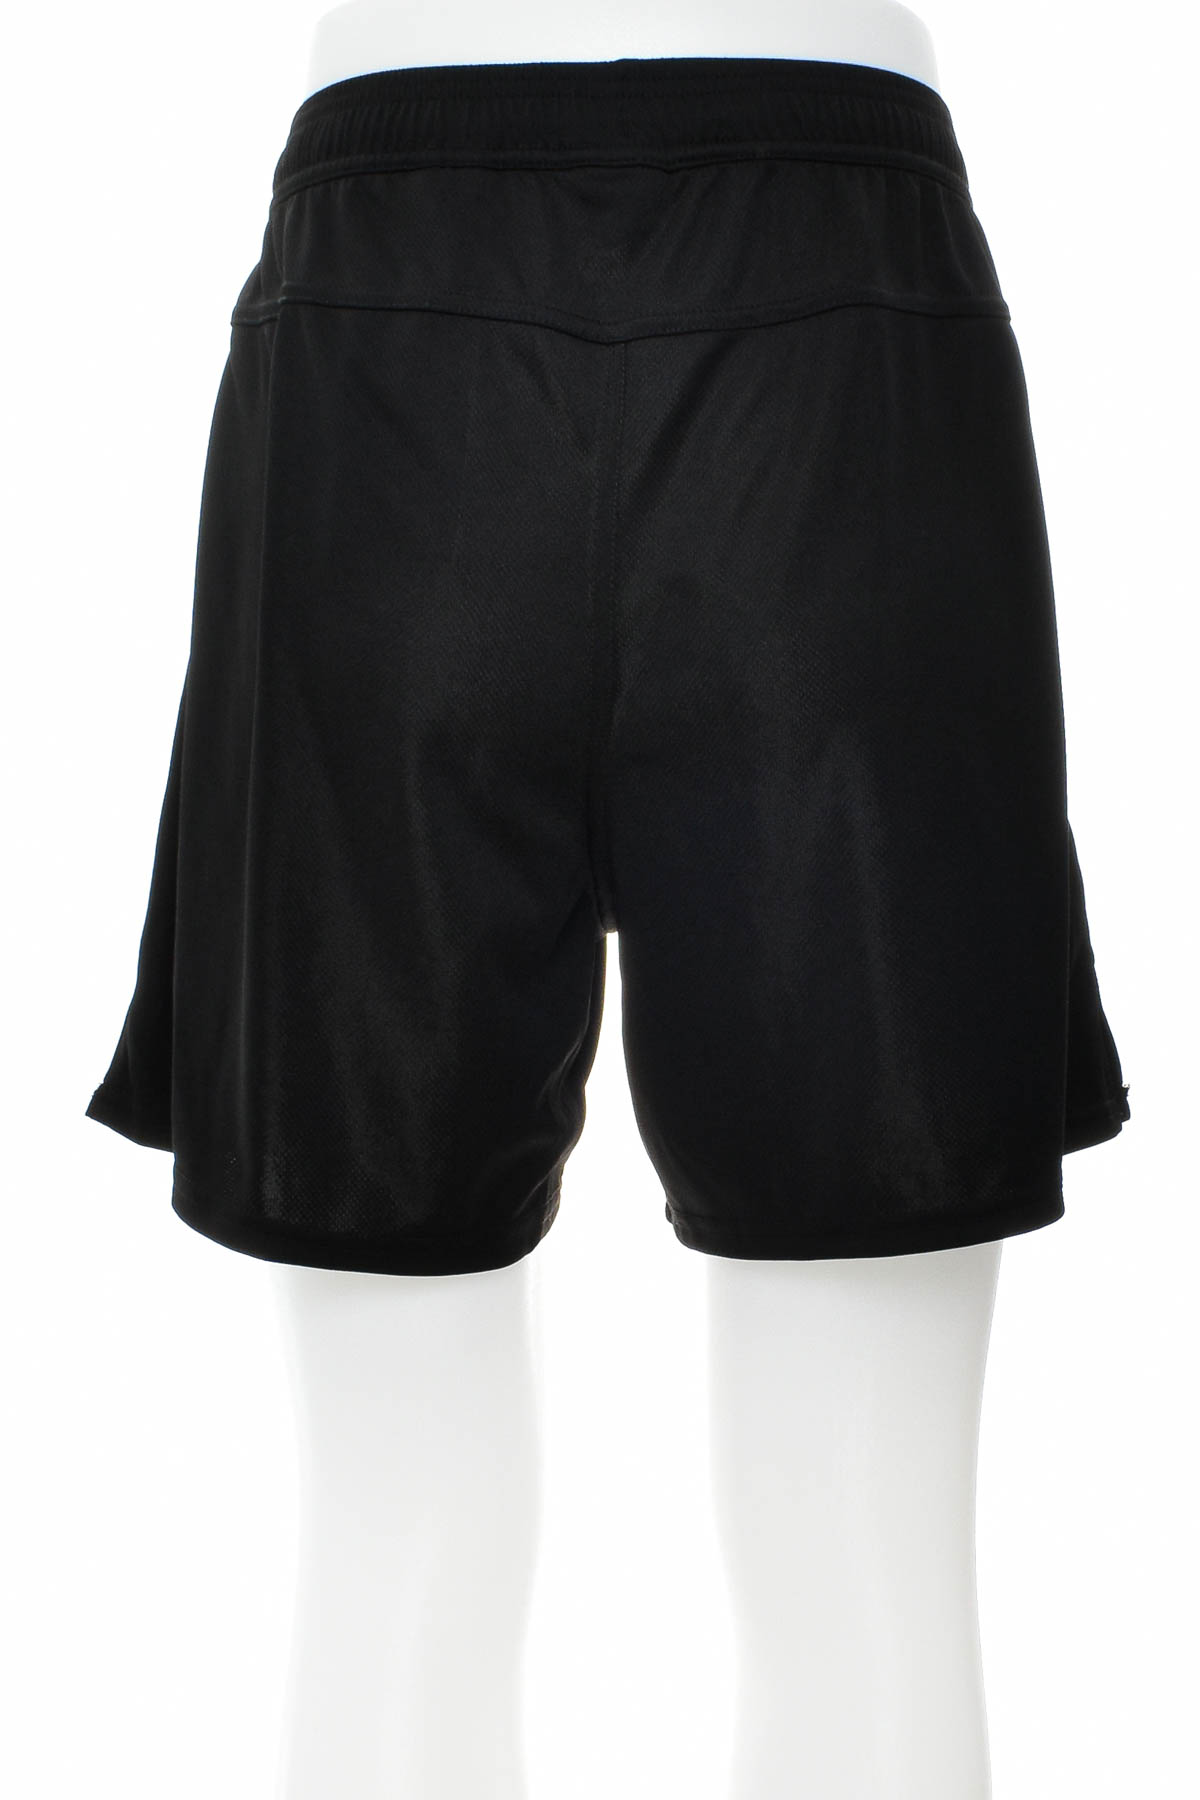 Men's shorts - H&M Sport - 1